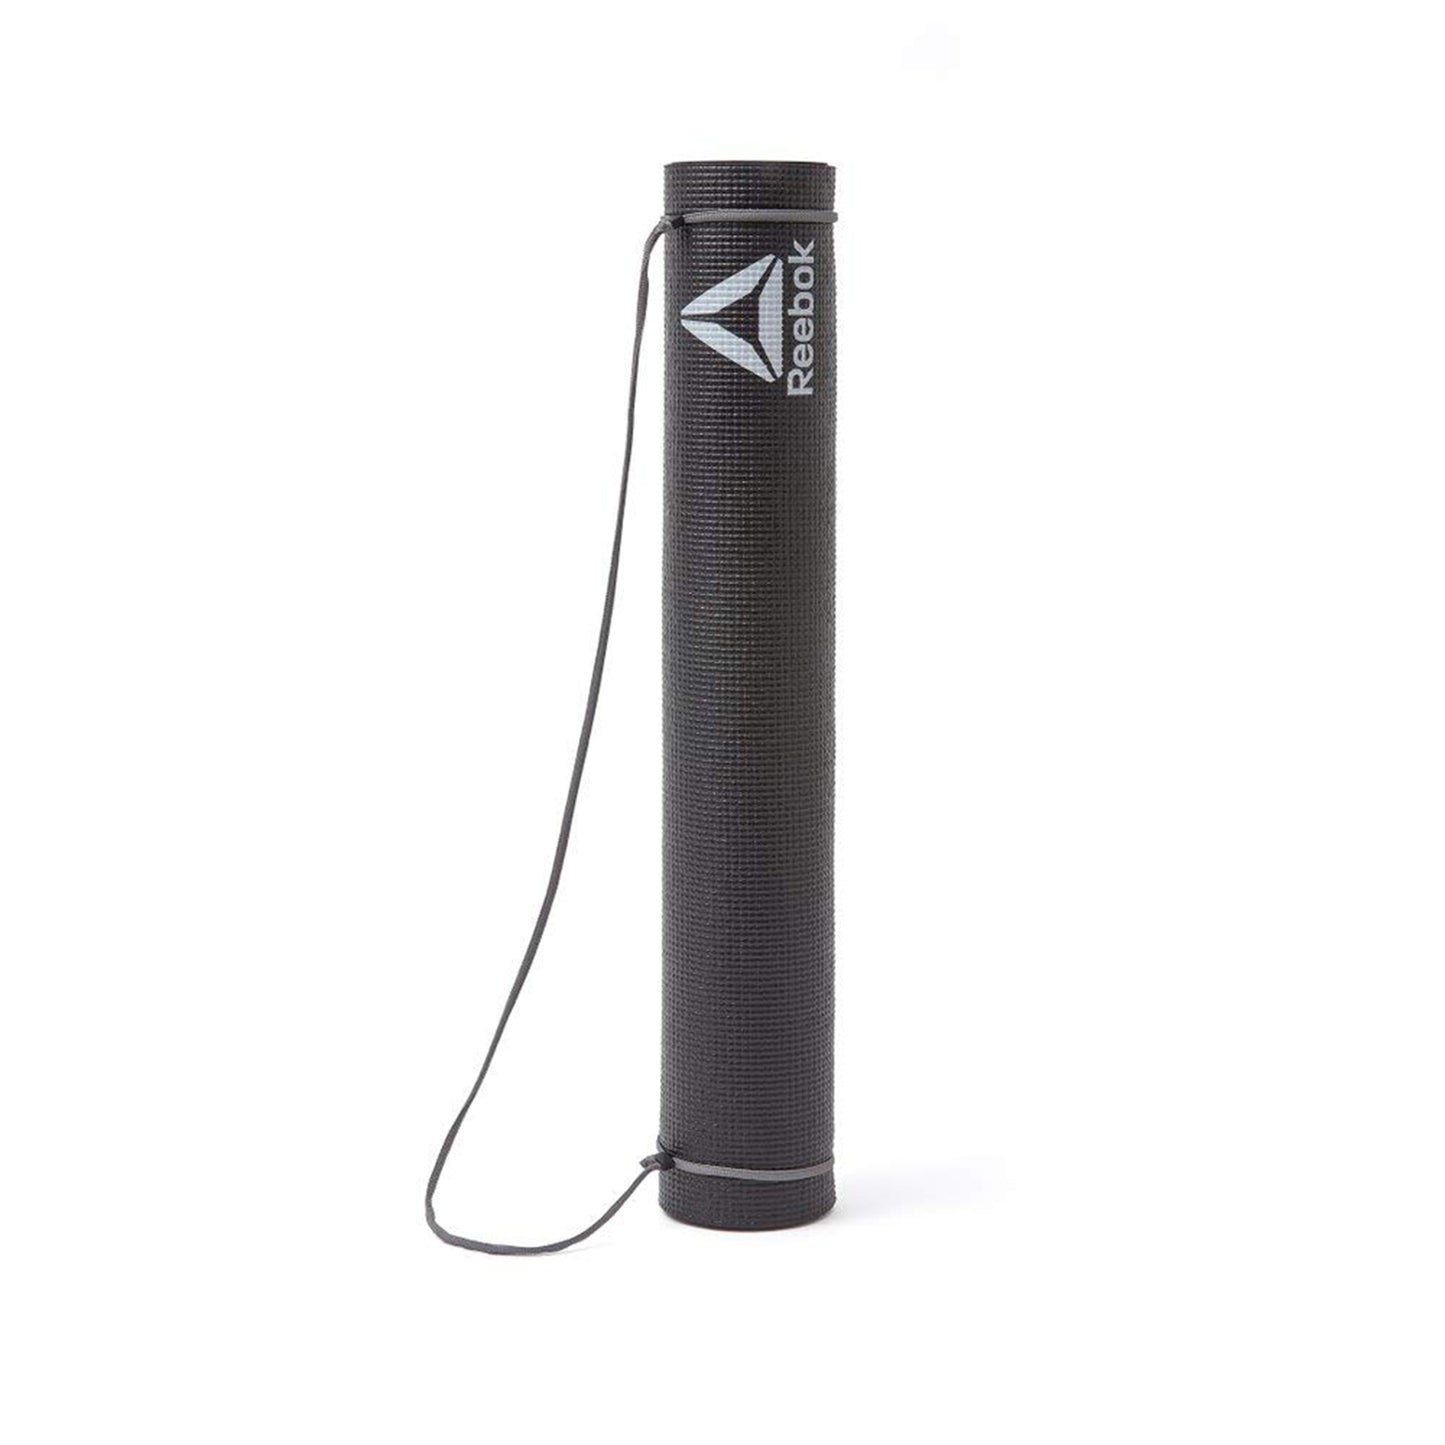 Reebok RAYG 11030 BK HD PVC Yoga Mat - 4 MM (Black) - Best Price online Prokicksports.com